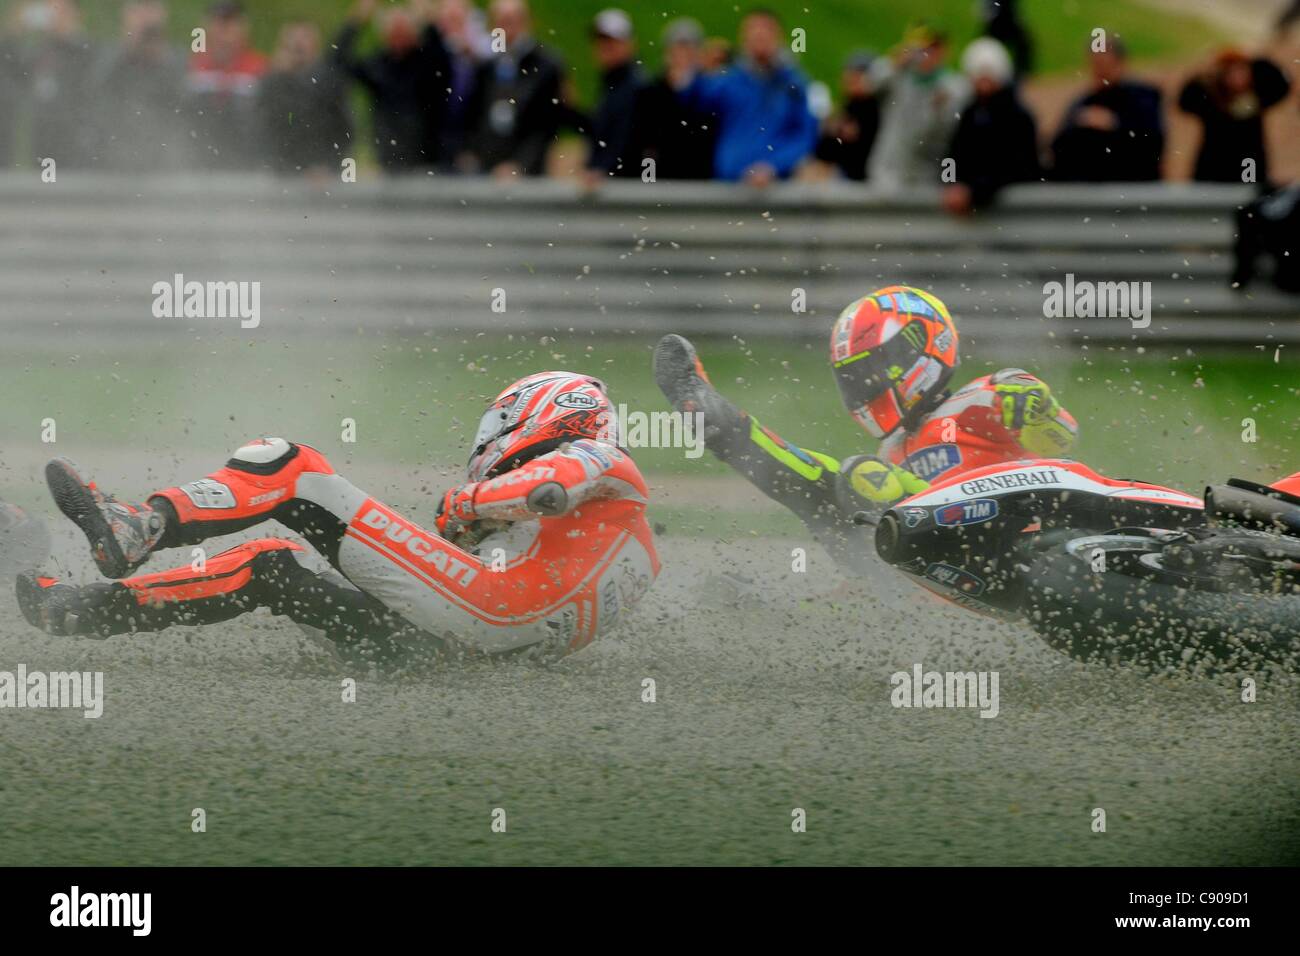 06.11.2011. Valence, Espagne. Classe MotoGP photo montre l'accident entre  Nicky Hayden et Valentino Rossi Photo Stock - Alamy